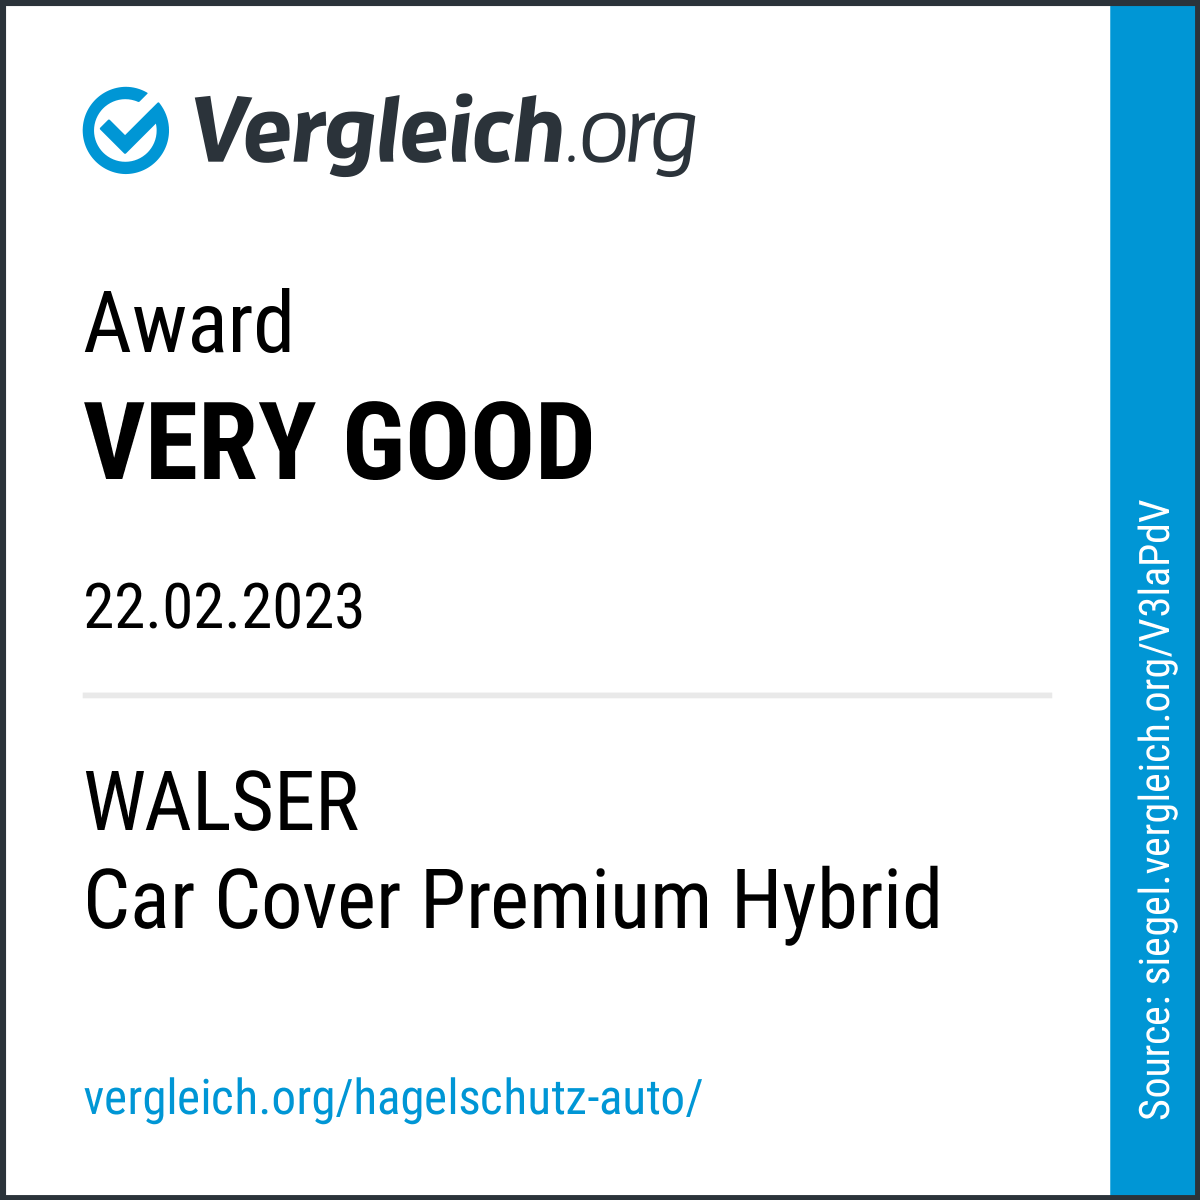 Car hail protection cover Premium Hybrid size XXL